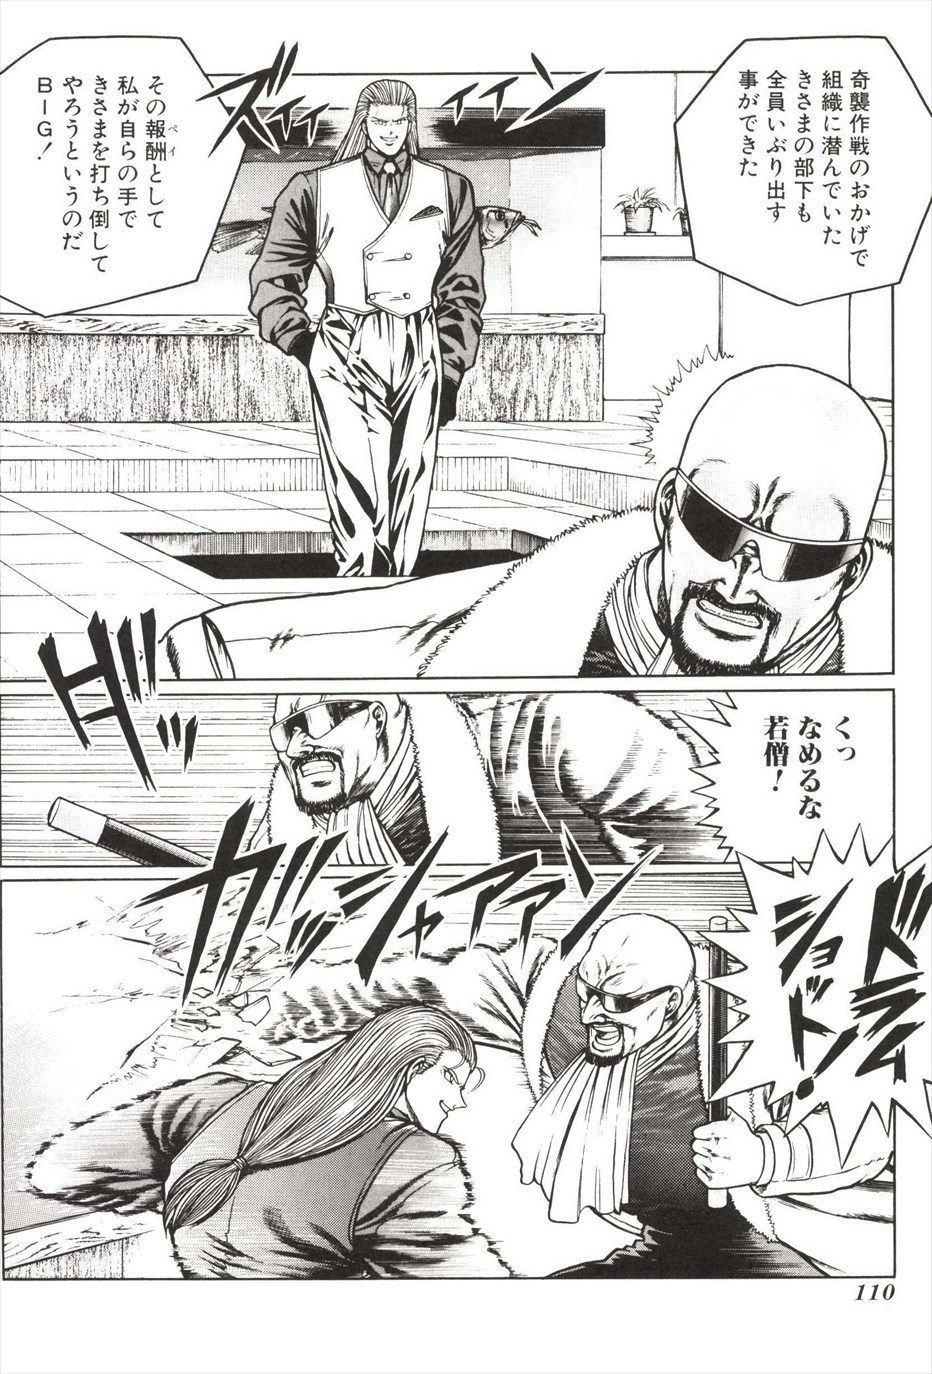 [amazishi etsuya] ART OF FIGHTING ryuuko no ken 2-2 111